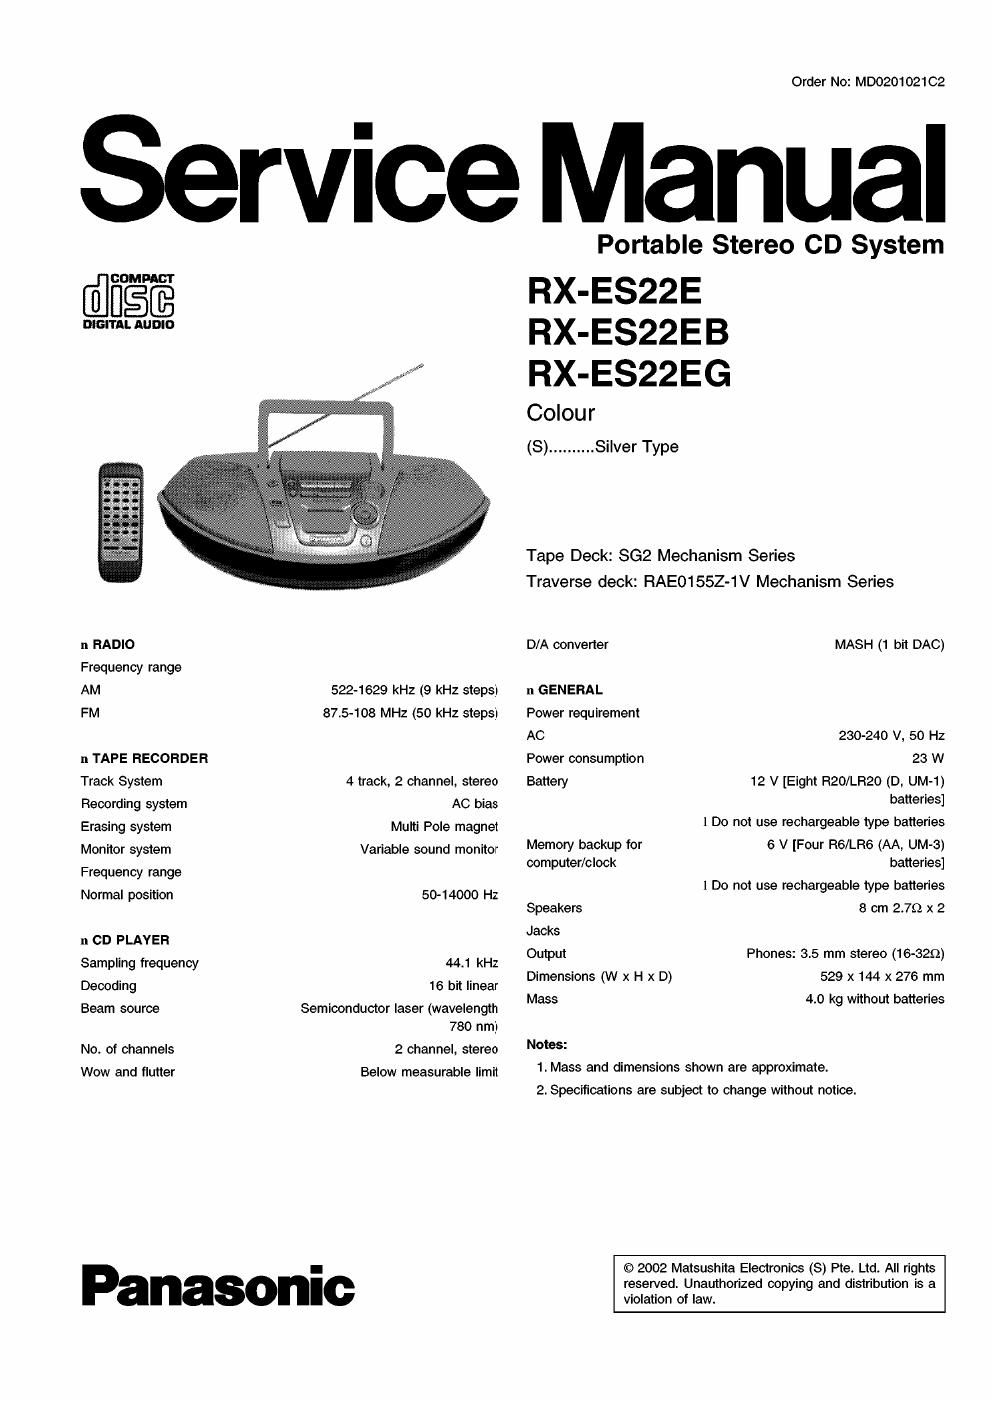 panasonic rx es 22 eb service manual